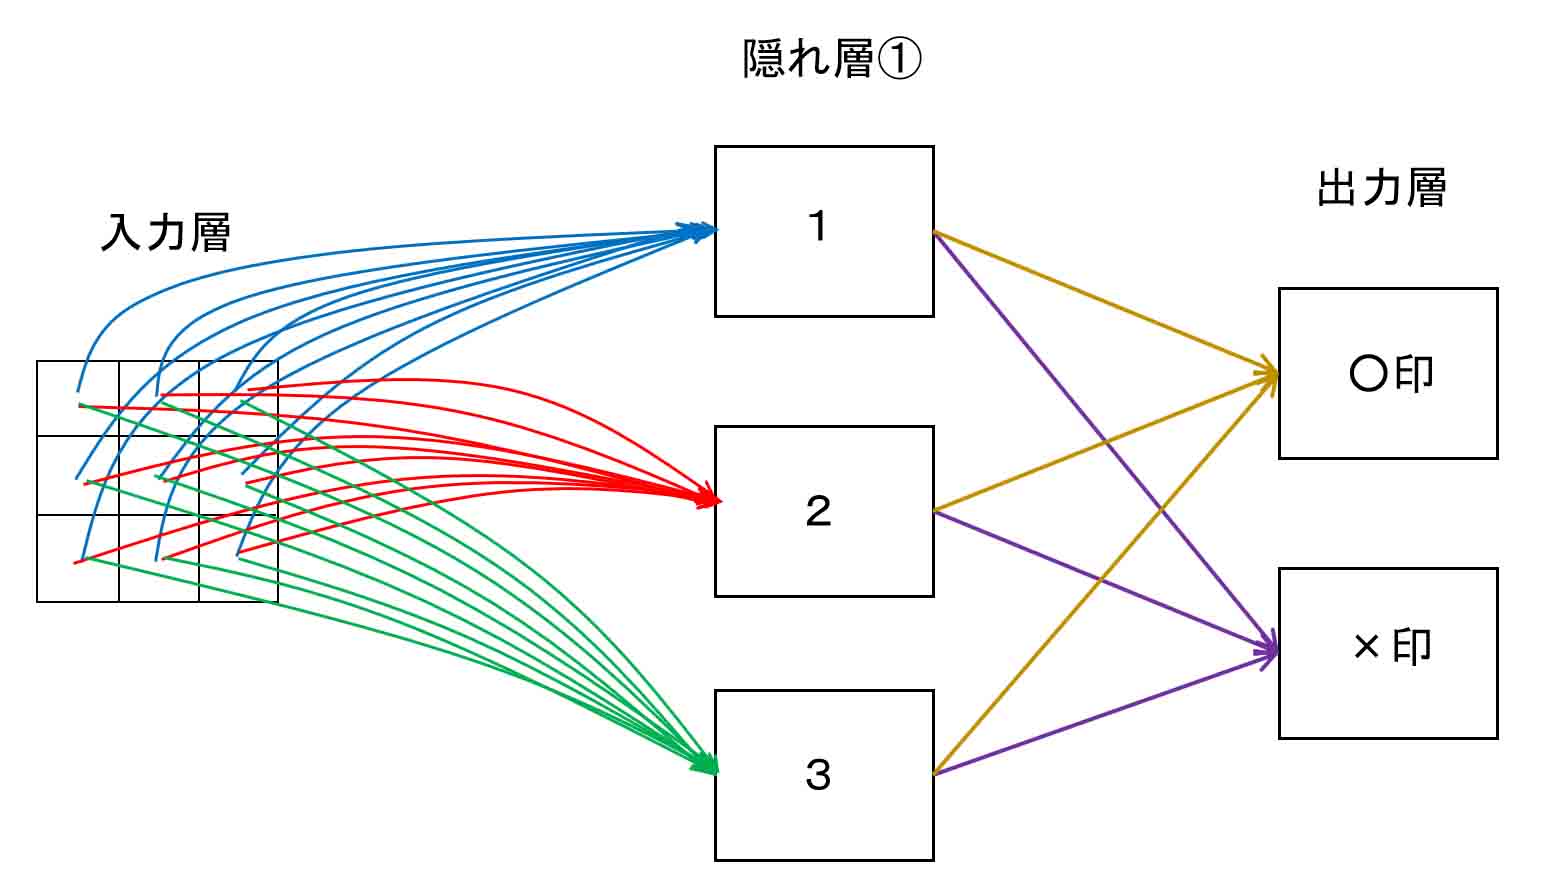 neural_network5_01.jpg